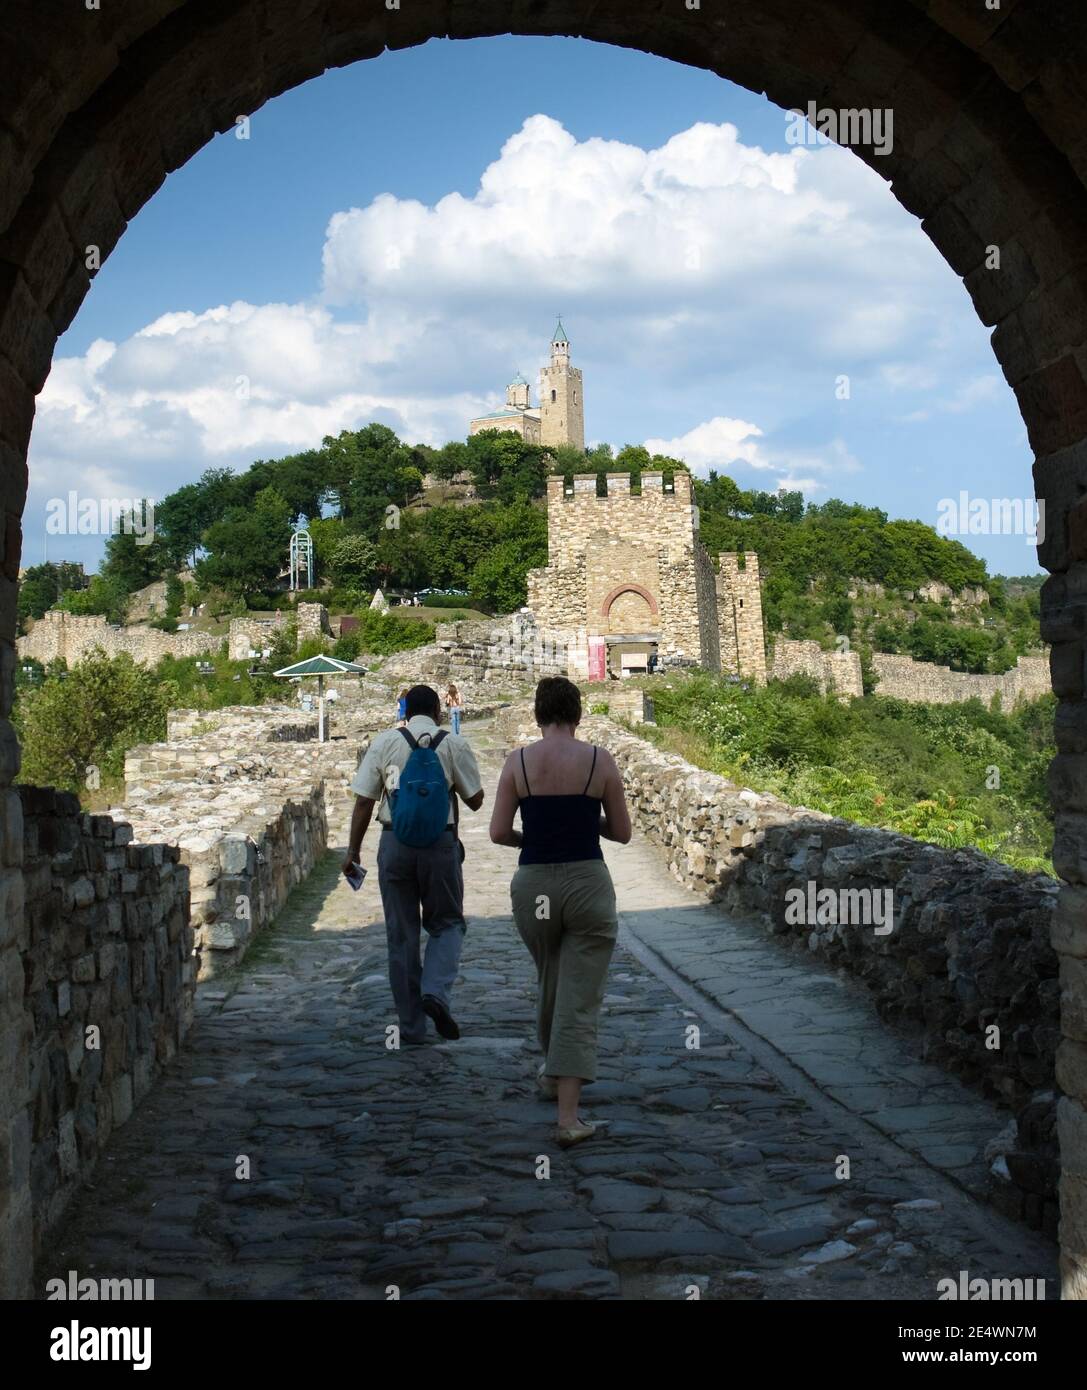 Veliko Tarnovo, Bulgarien - 04. August 2011: Touristen überqueren das Tor zum Berg Tsarevets in Veliko Tarnovo - Bulgarien Stockfoto